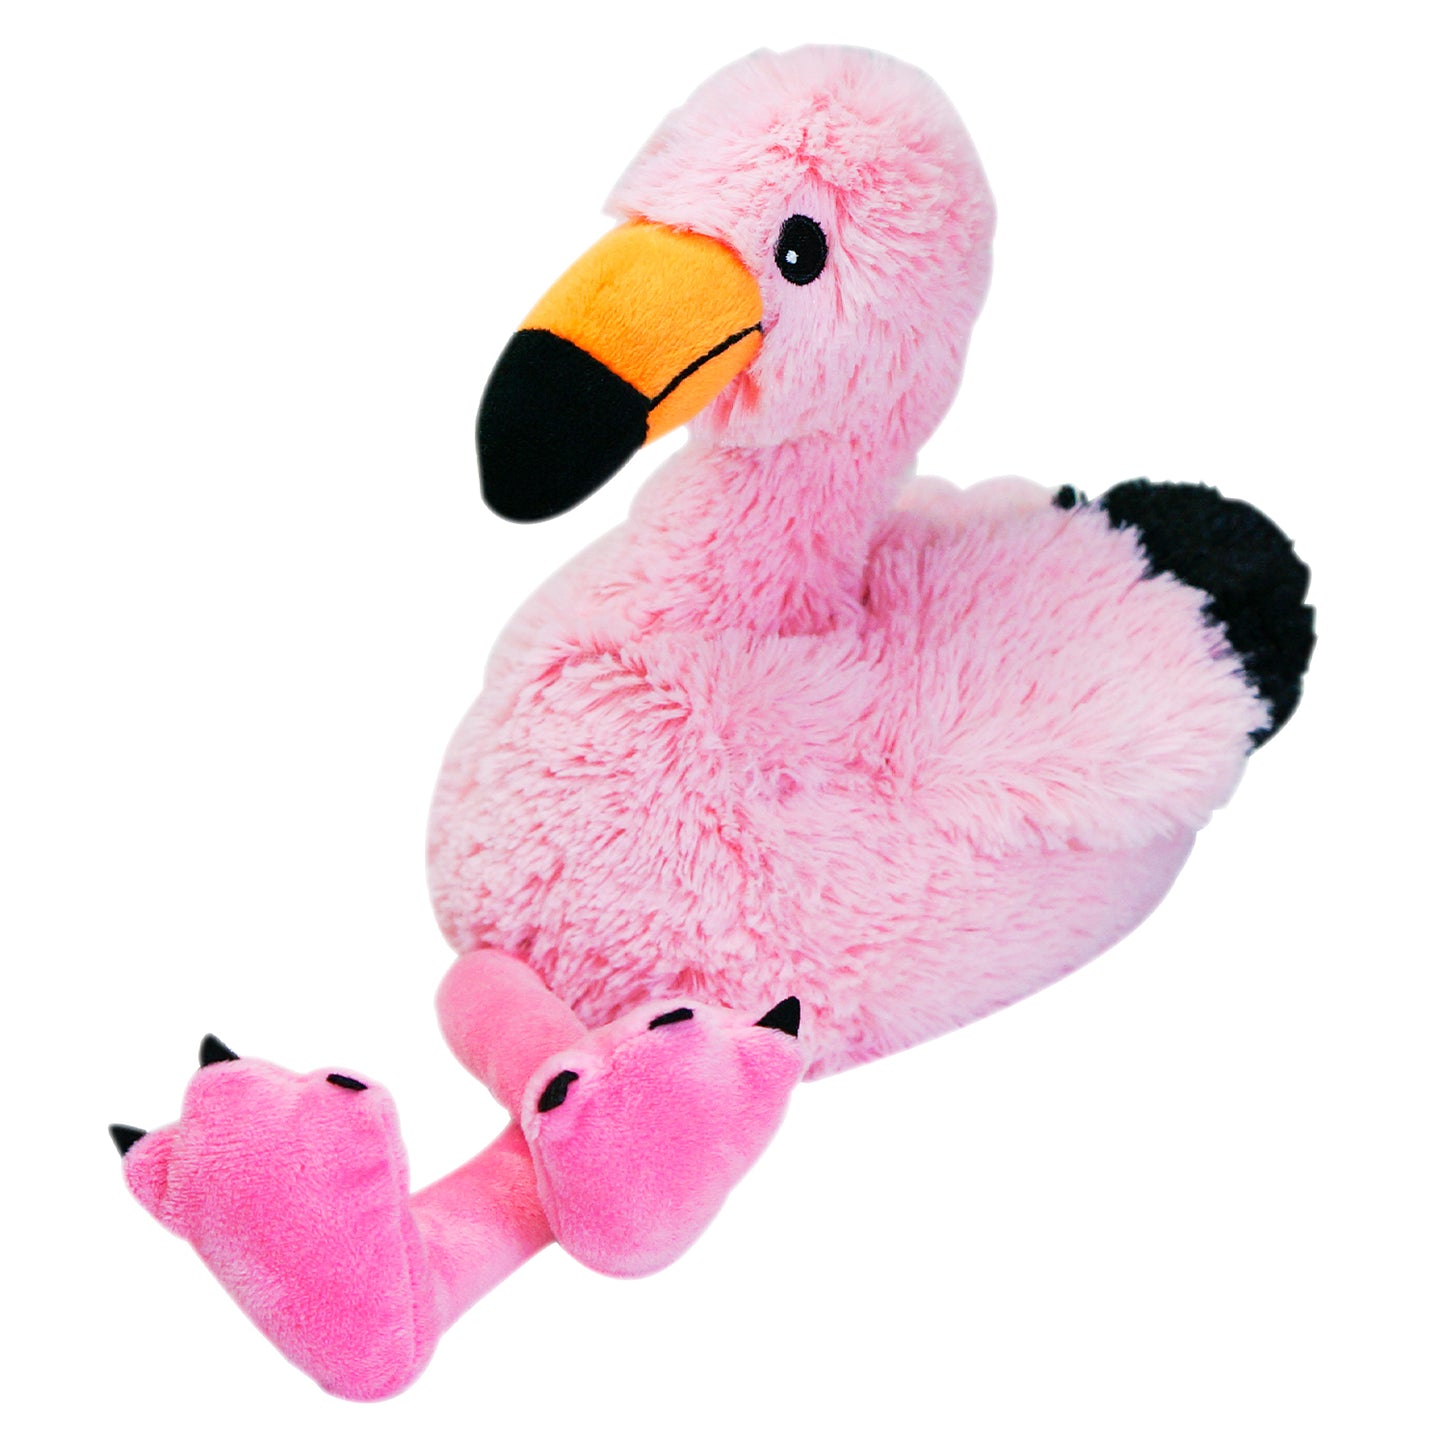 Warmies Plush Animal - Flamingo